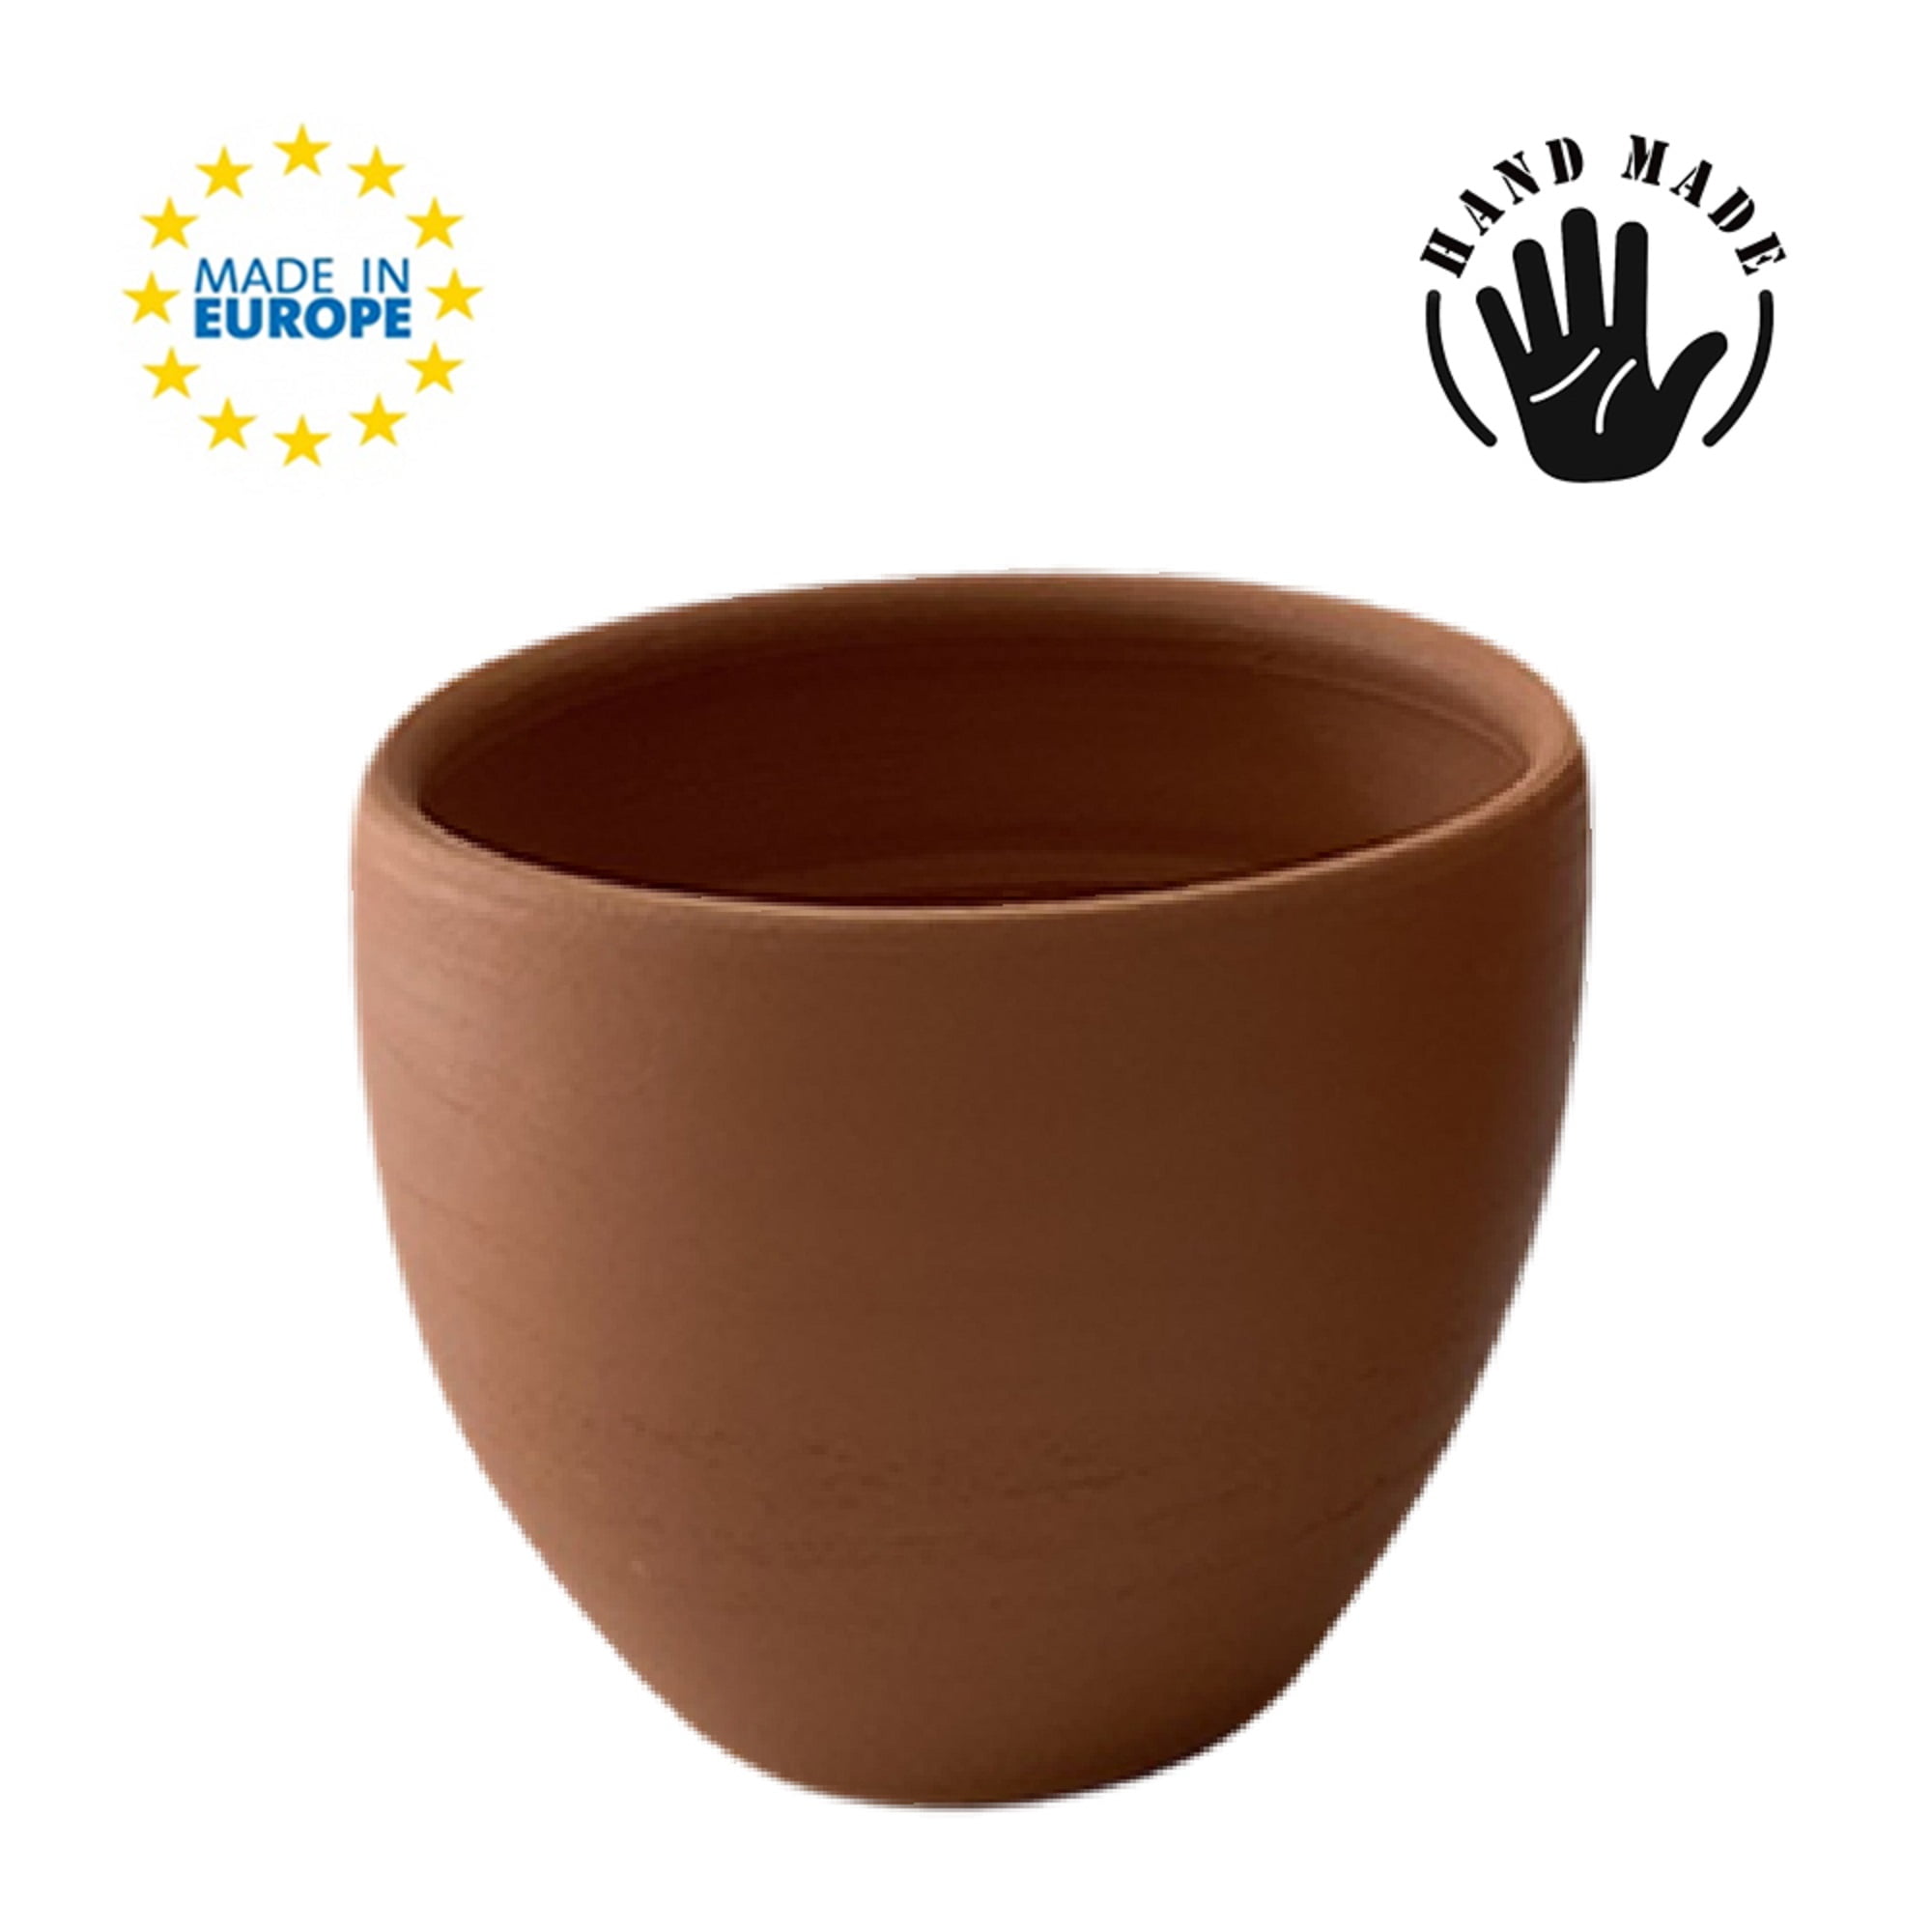 Handmade Mug Large Pottery Mug Ceramic Mug Espresso Mug Stoneware Pottery Mug Unique Pottery Gift Tea Cup Blue and Purple Pottery Mug